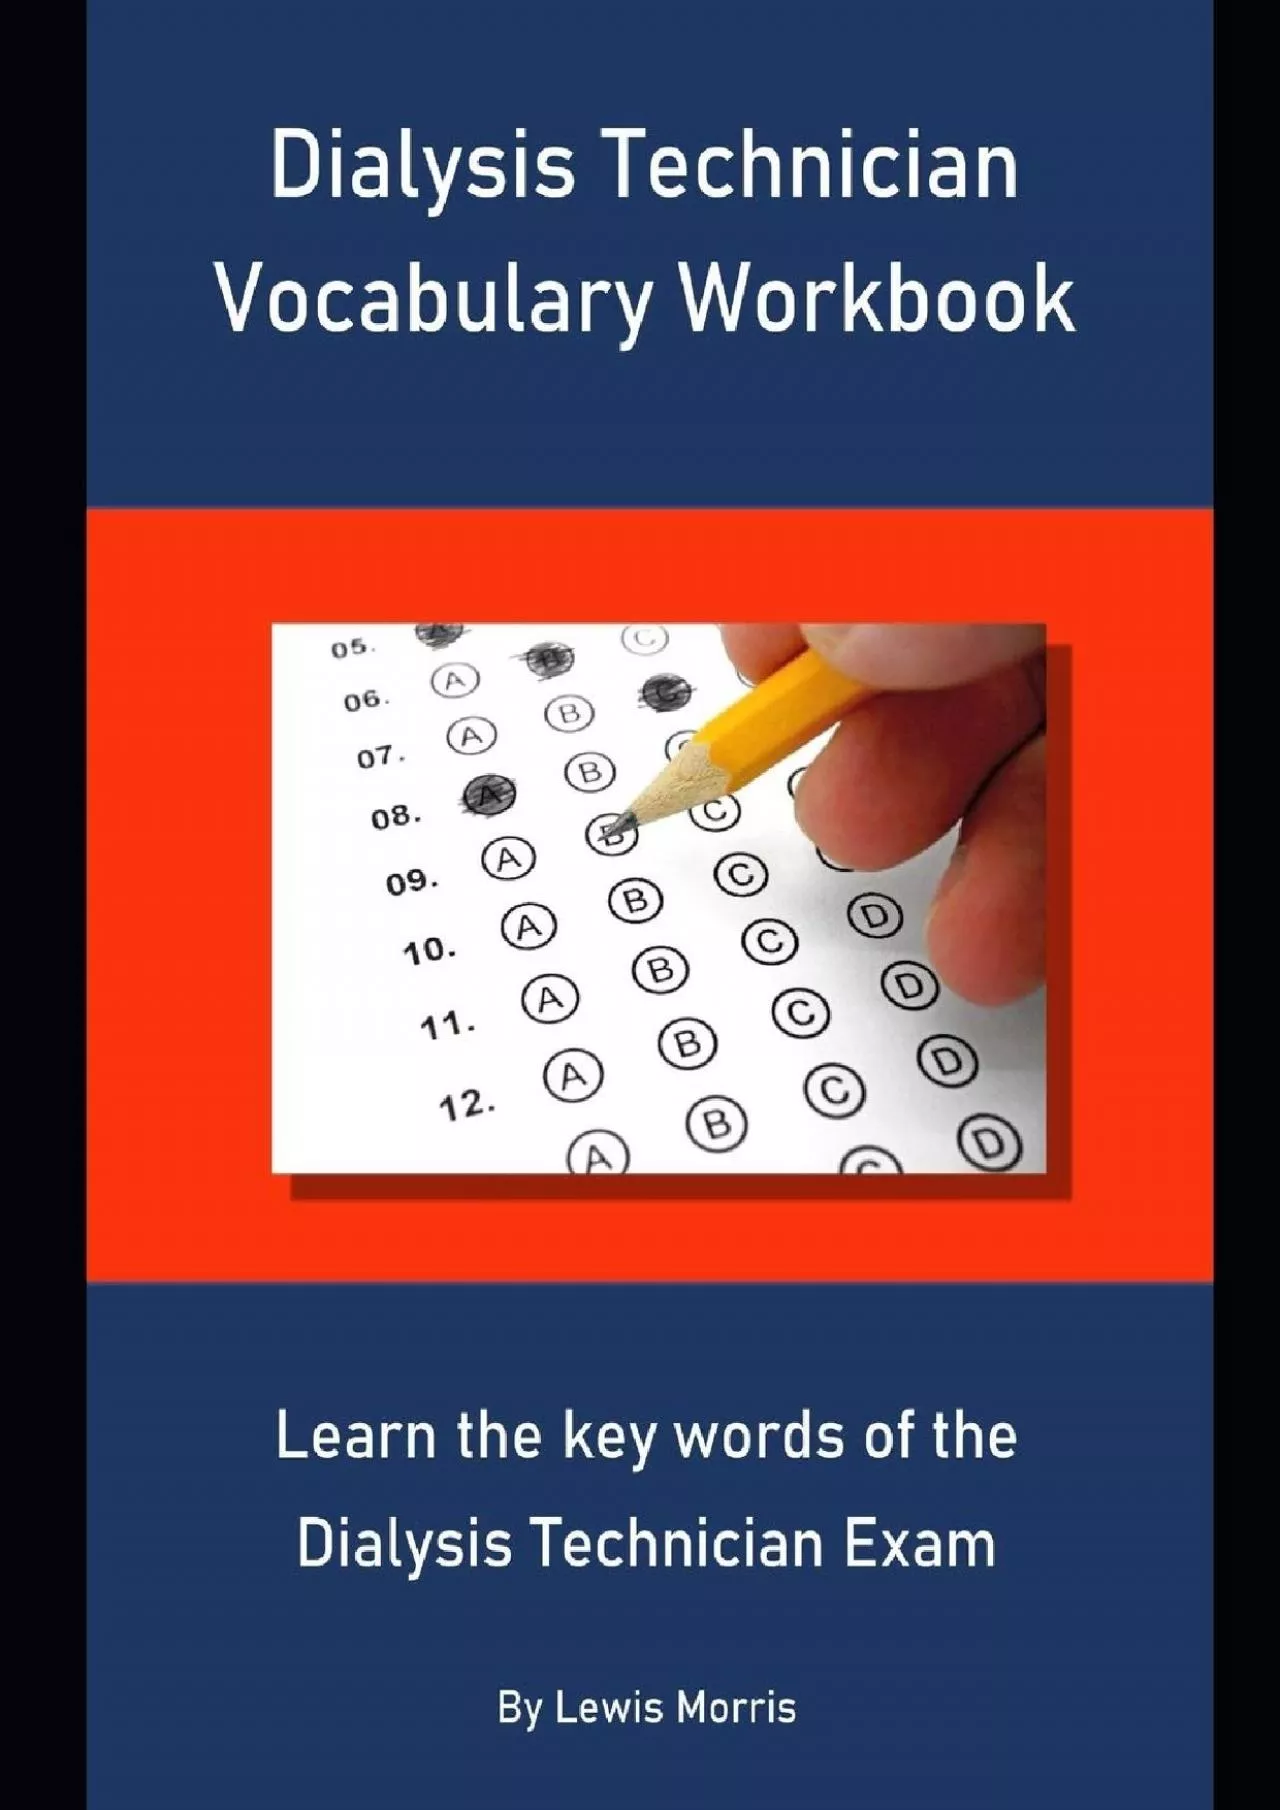 [READ] Dialysis Technician Vocabulary Workbook: Learn the key words of the Dialysis Technician